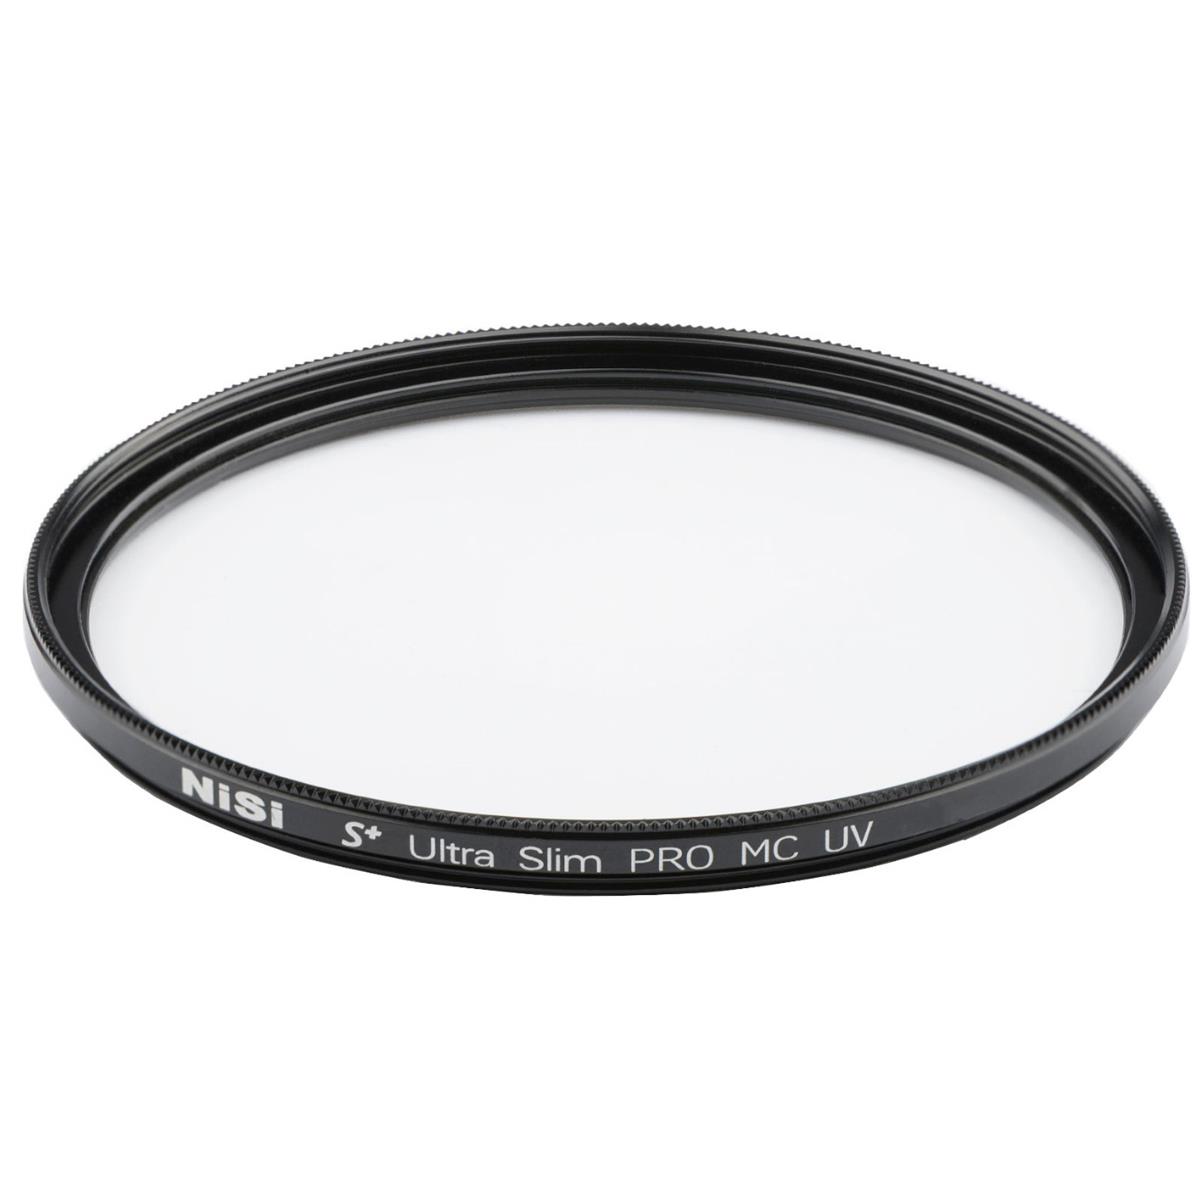 NiSi 95mm S+ Ultra Slim Pro MC UV Filter (Adorama Exclusive)